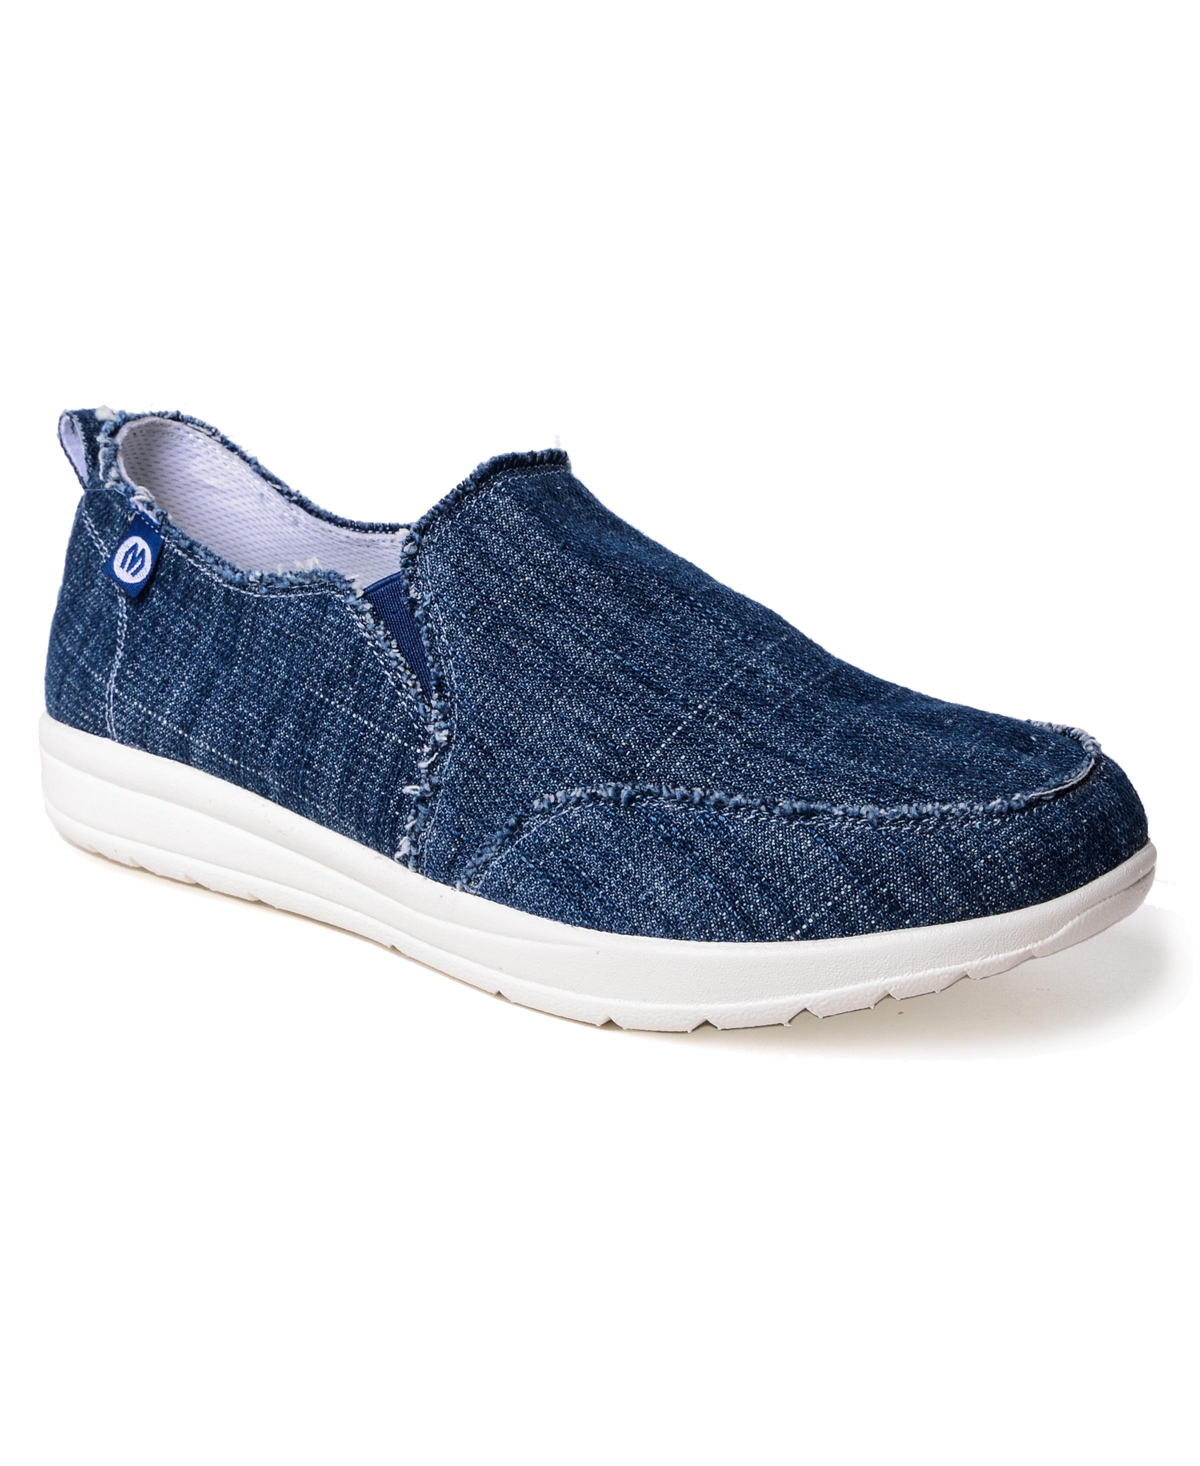 Women's Expanse Slip-on Shoes - Medium Blue